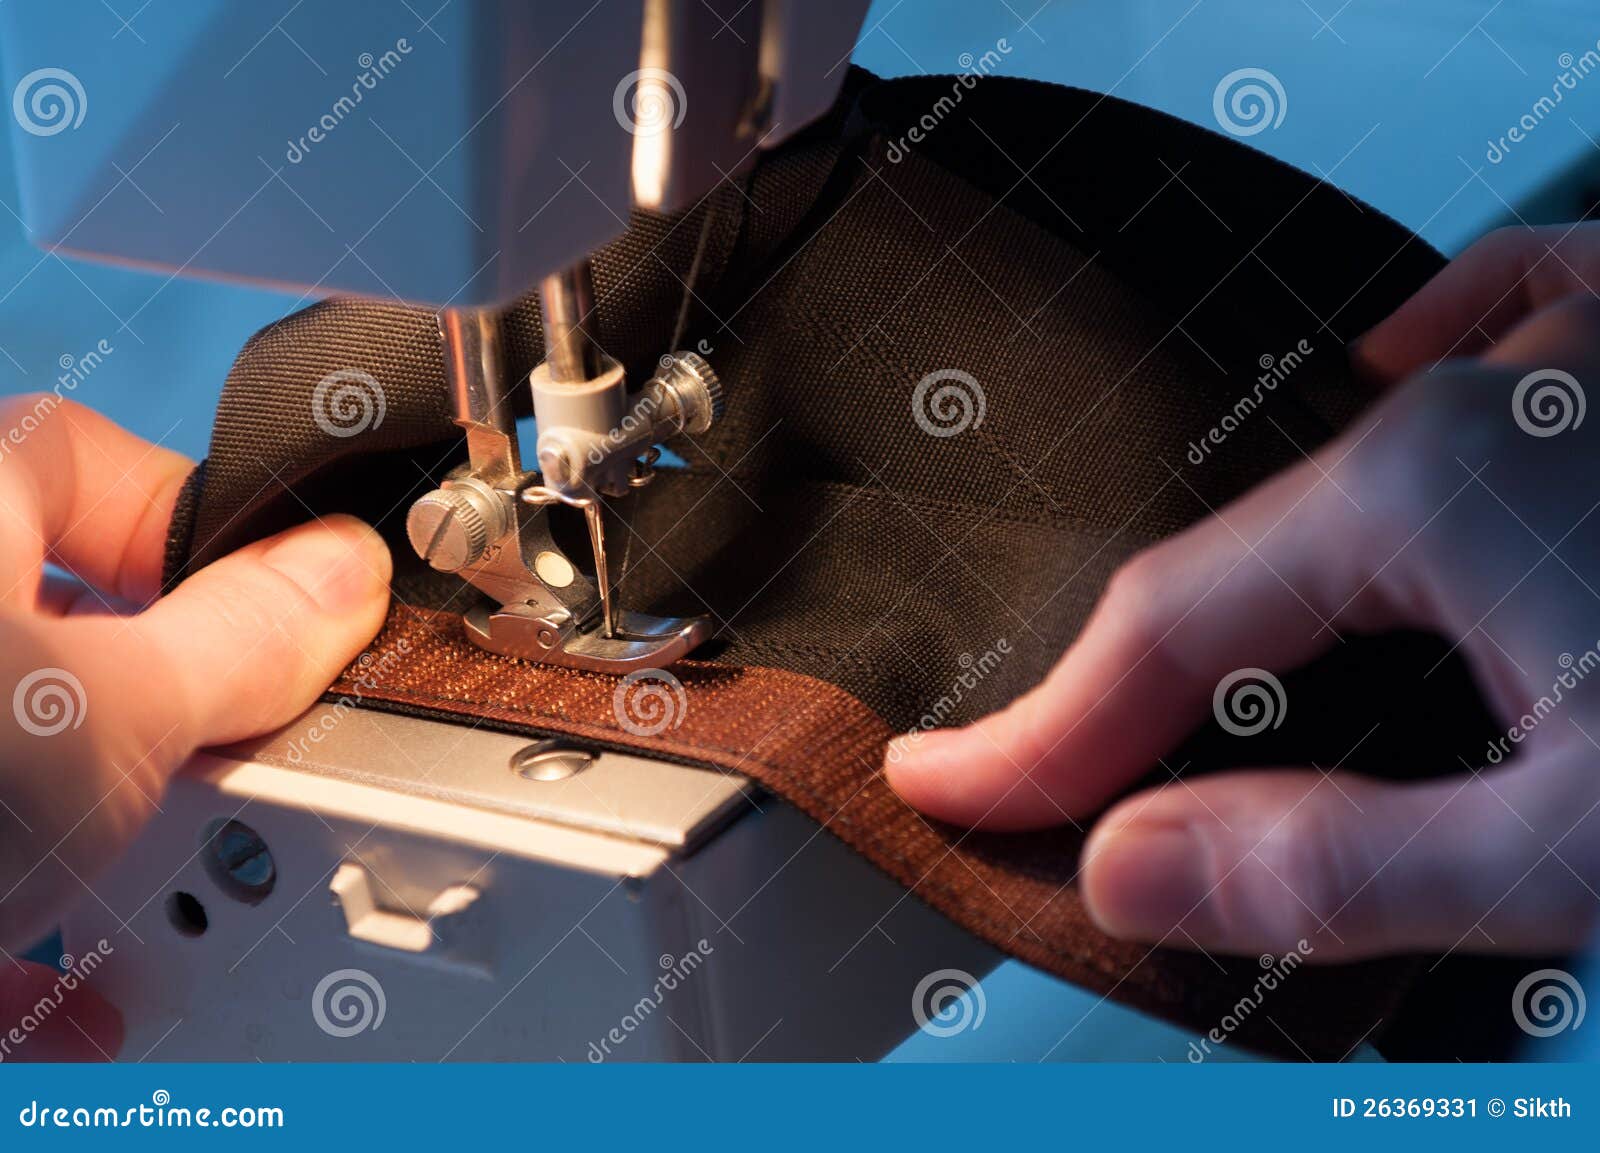 seamstress sewing on velcro hook-and-loop fastener